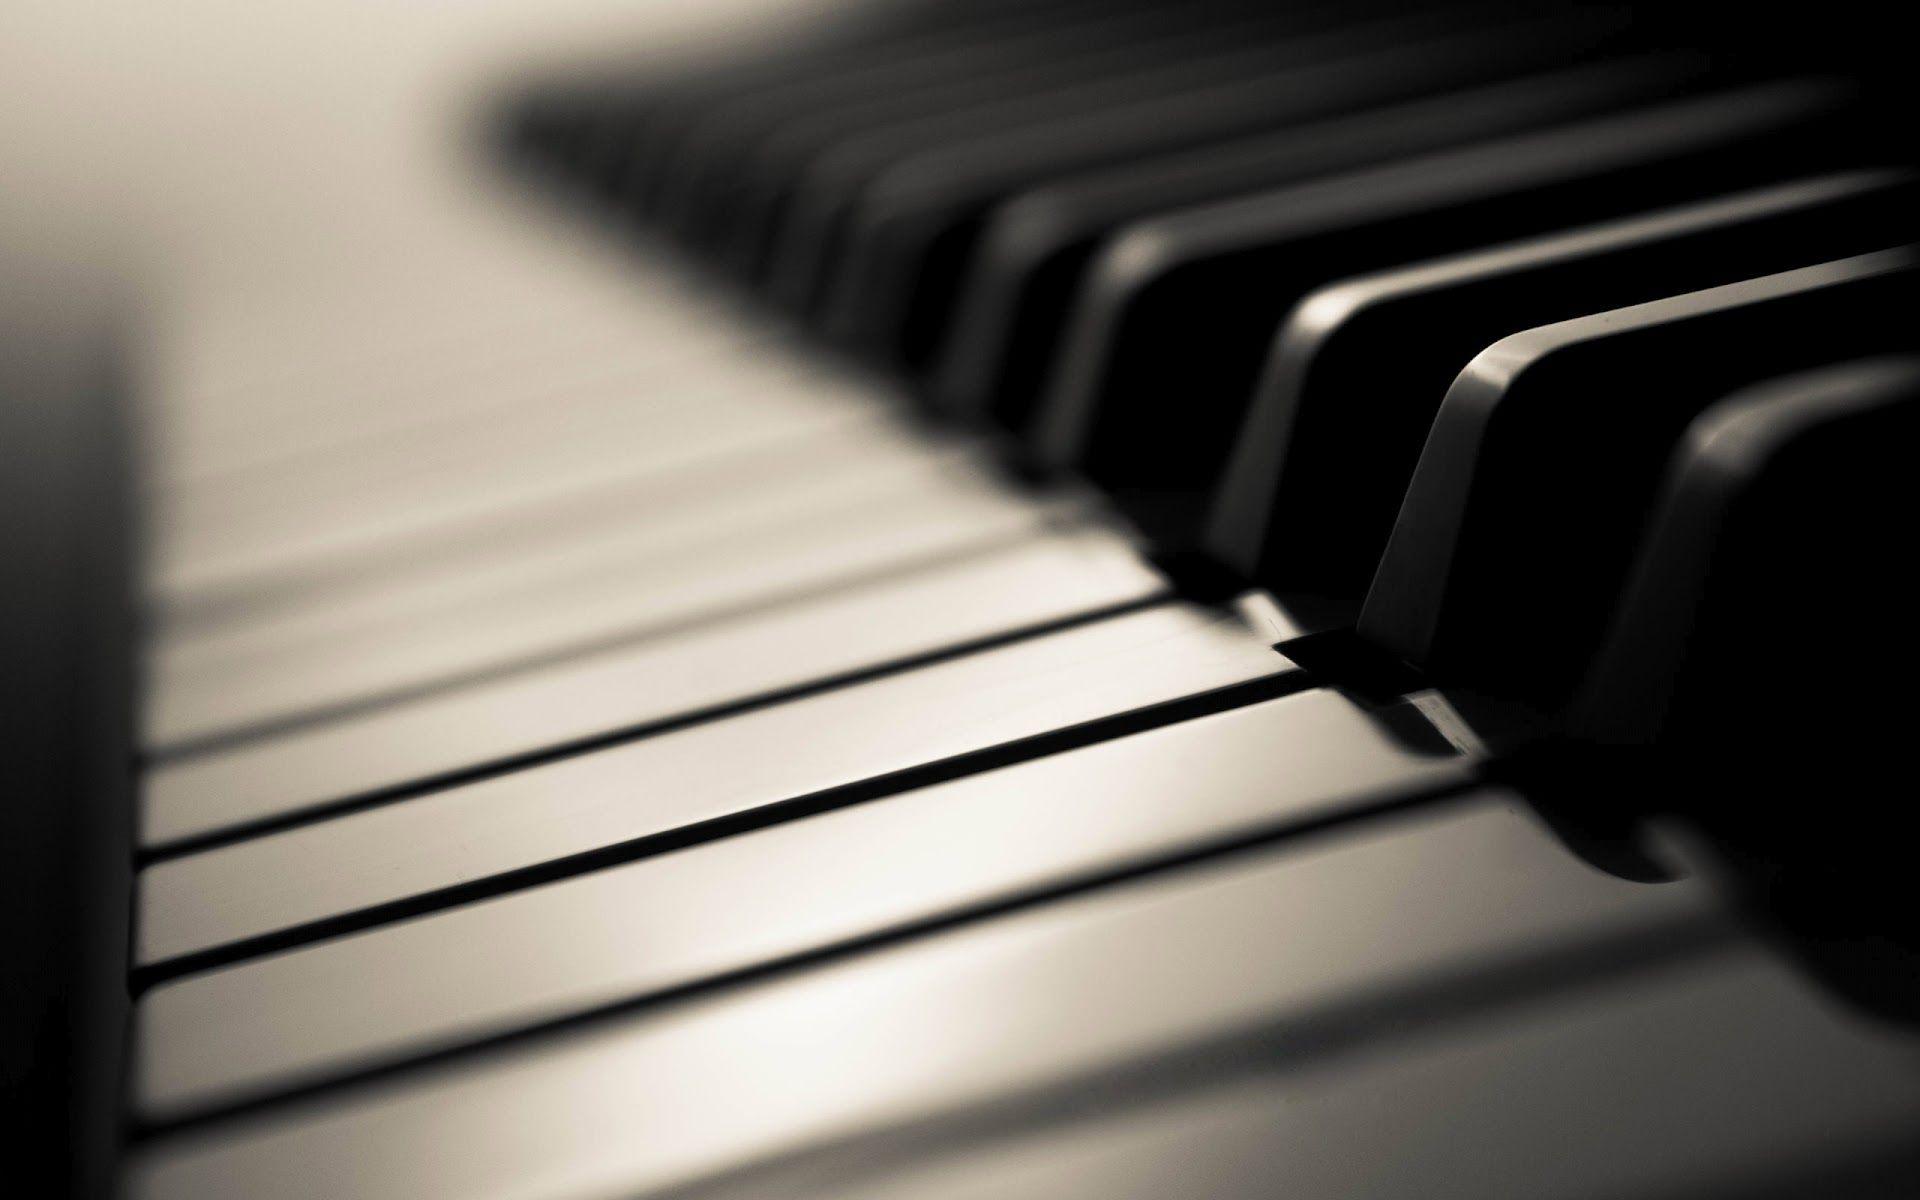 Piano Keys Wallpaper Image Gallery